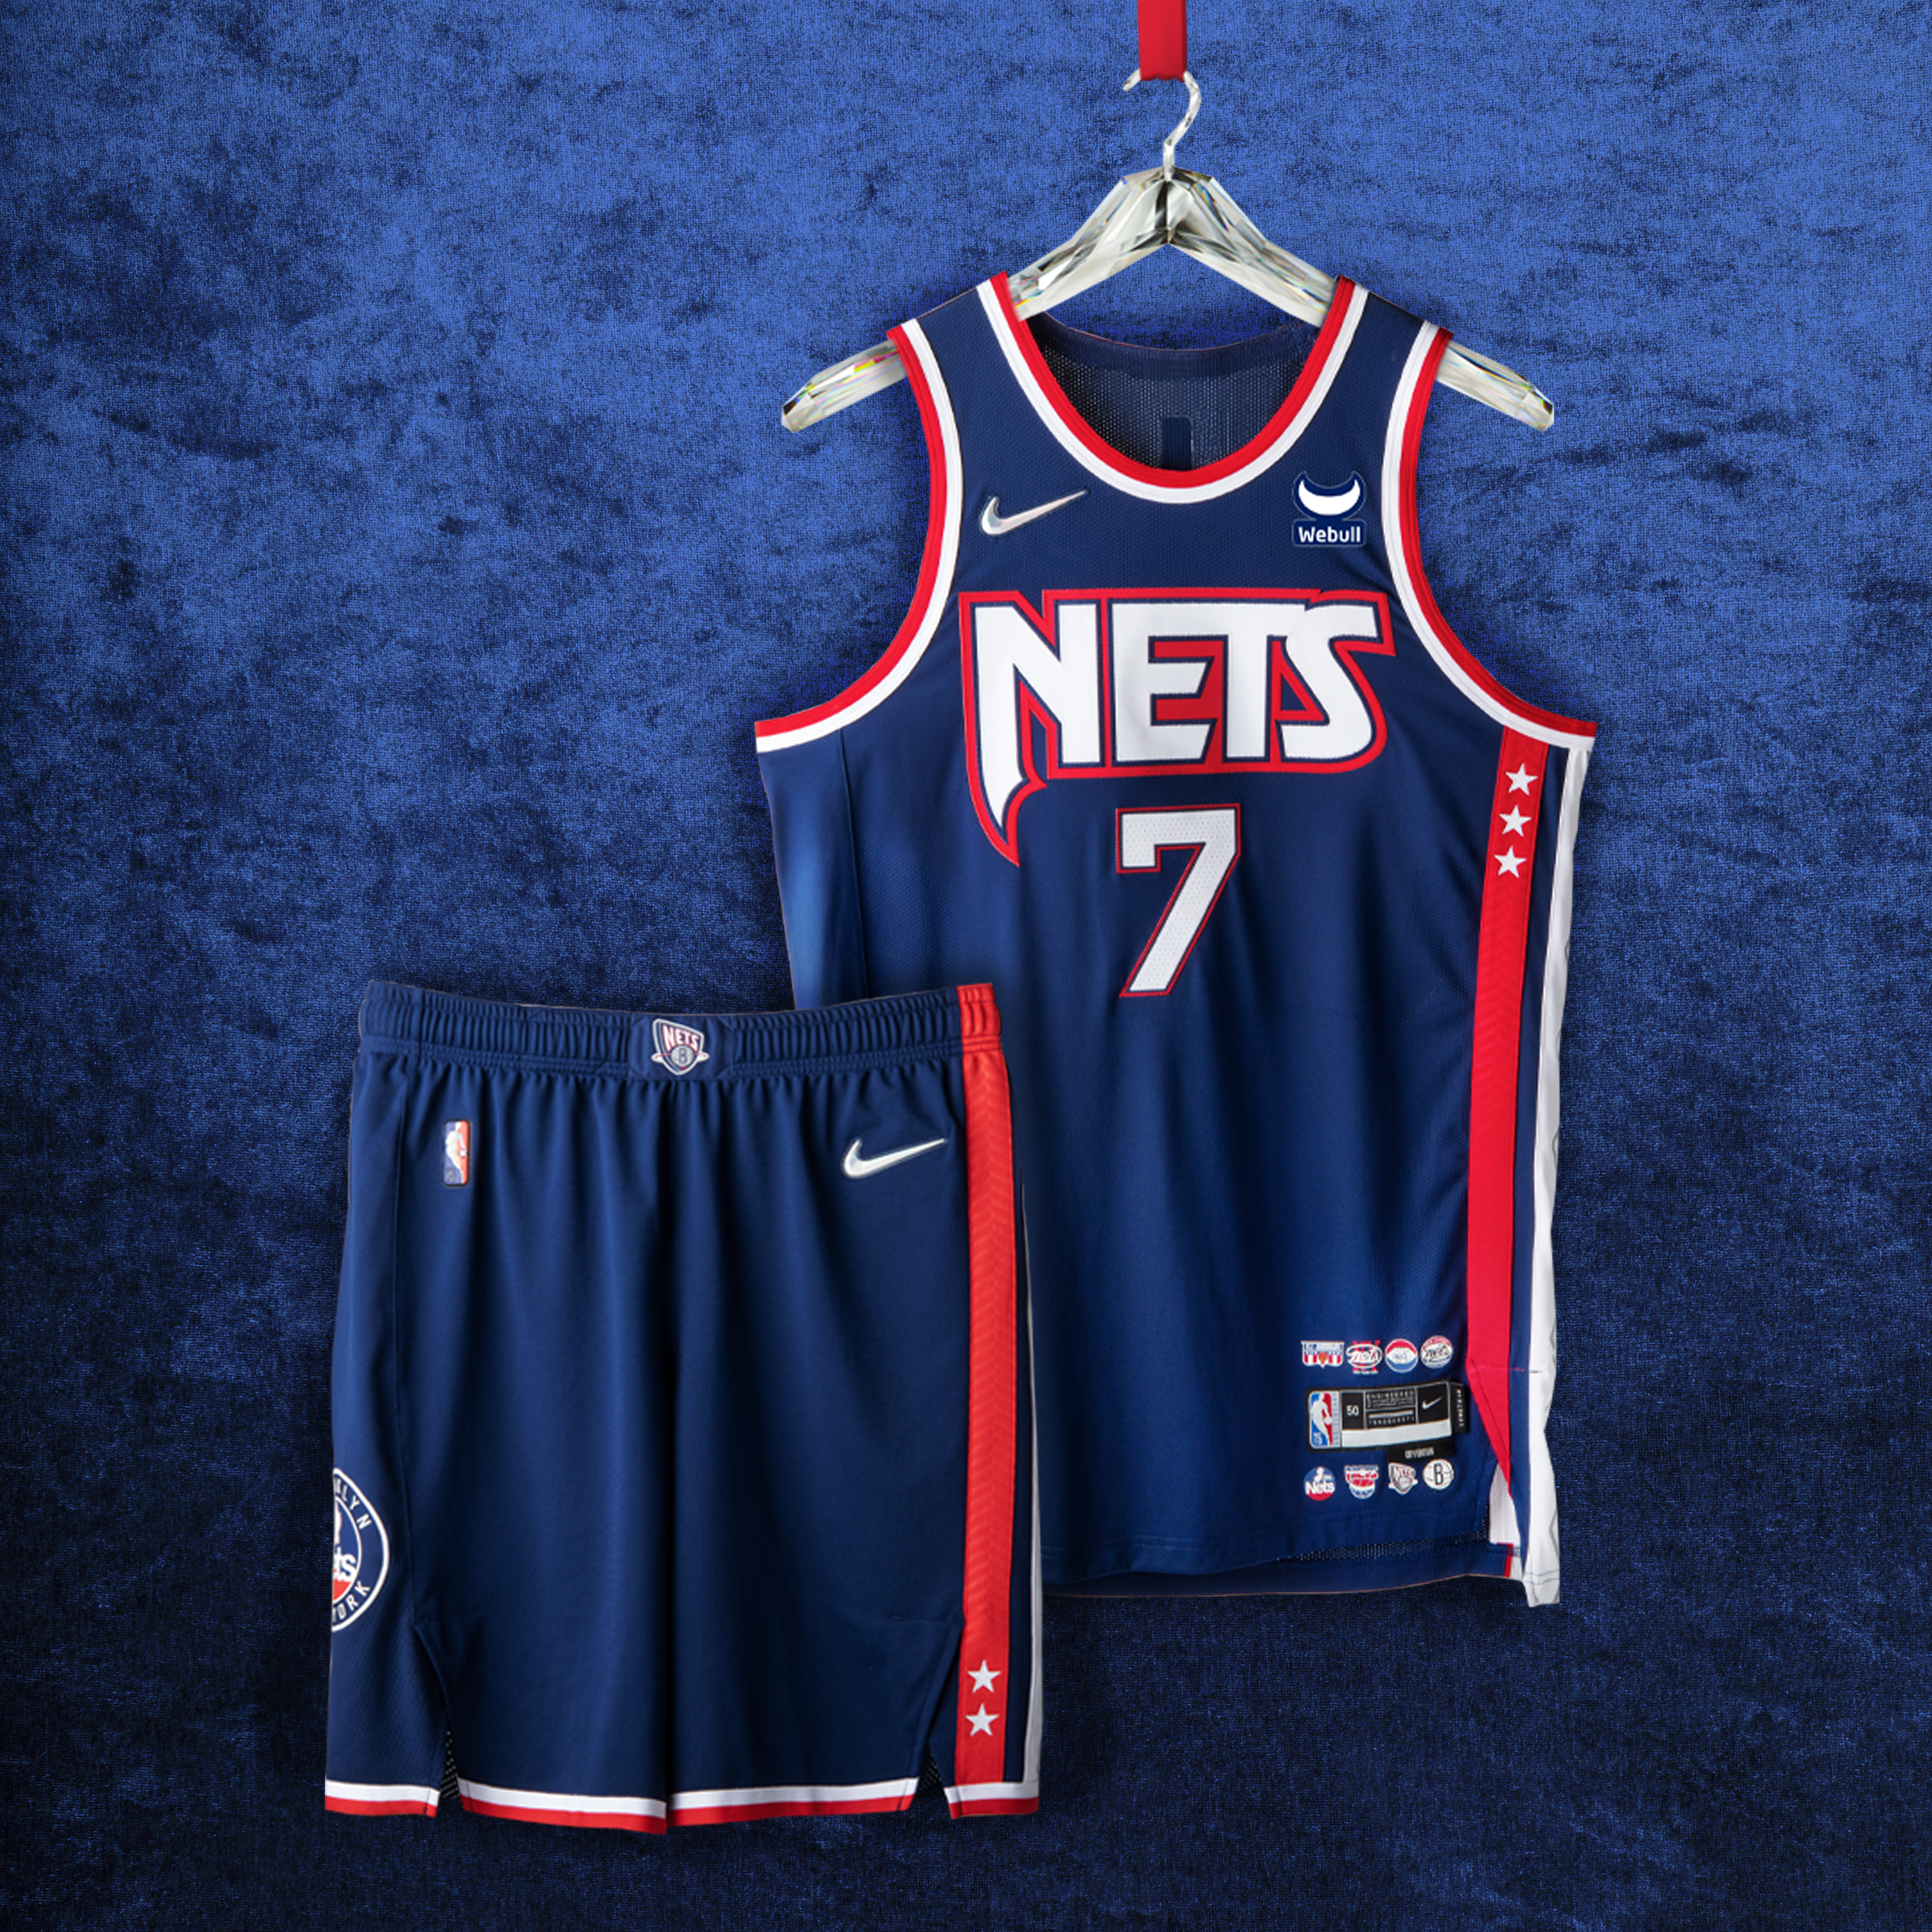 Brooklyn Nets uniforms for the 2020-21 NBA season